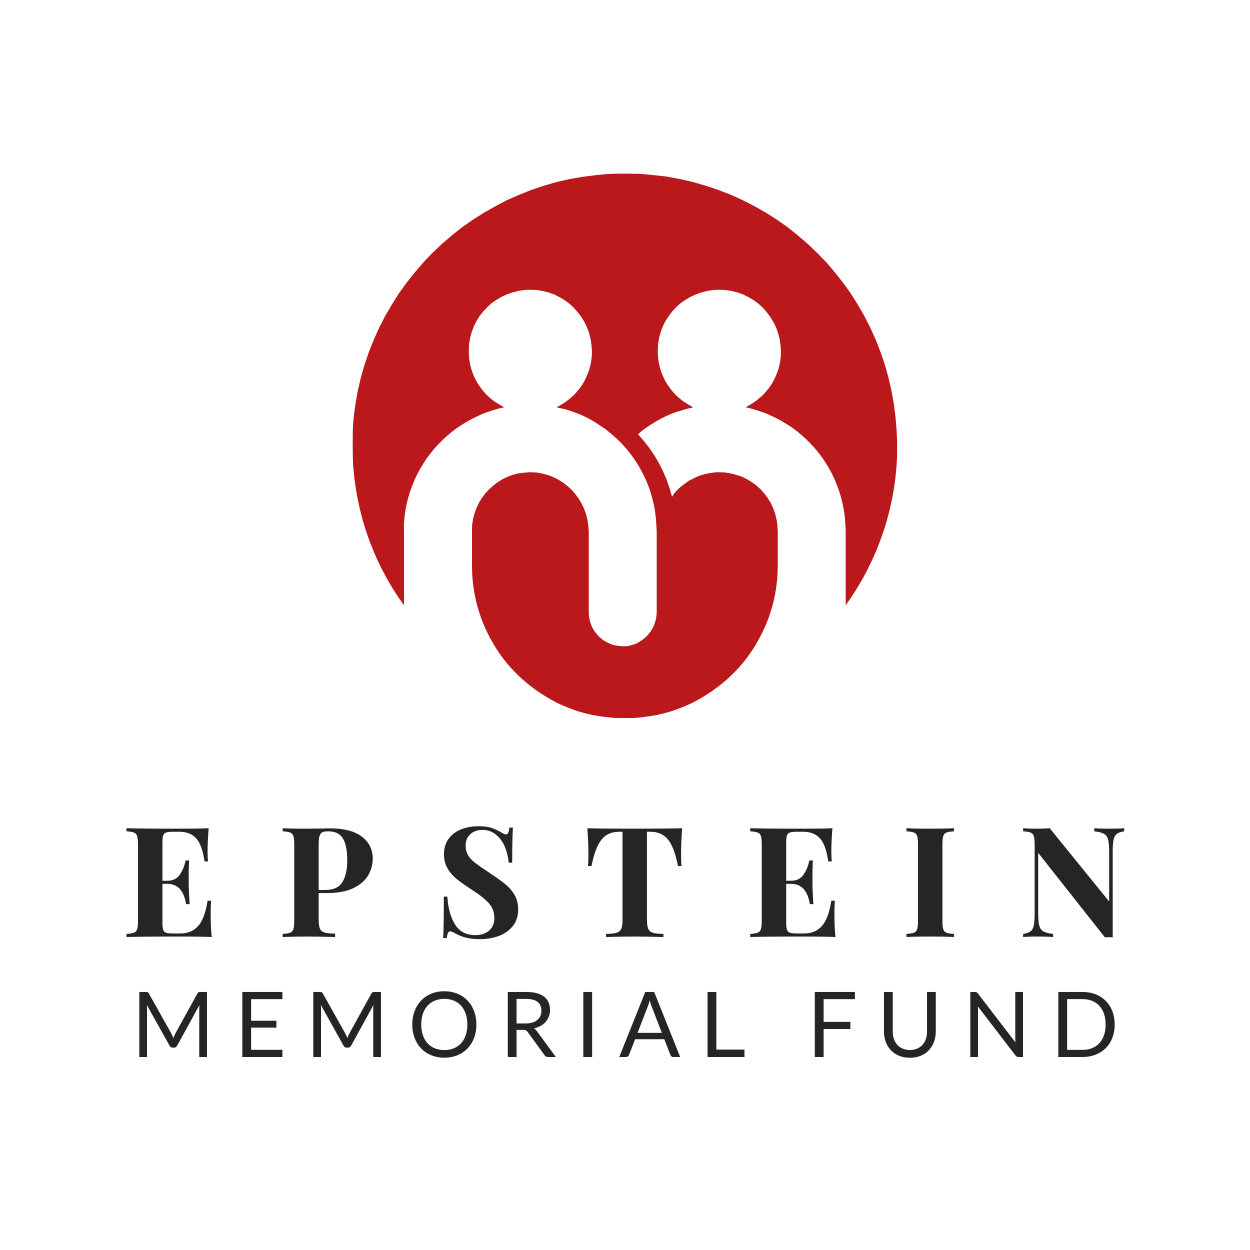 epsteinmemorialfund.org